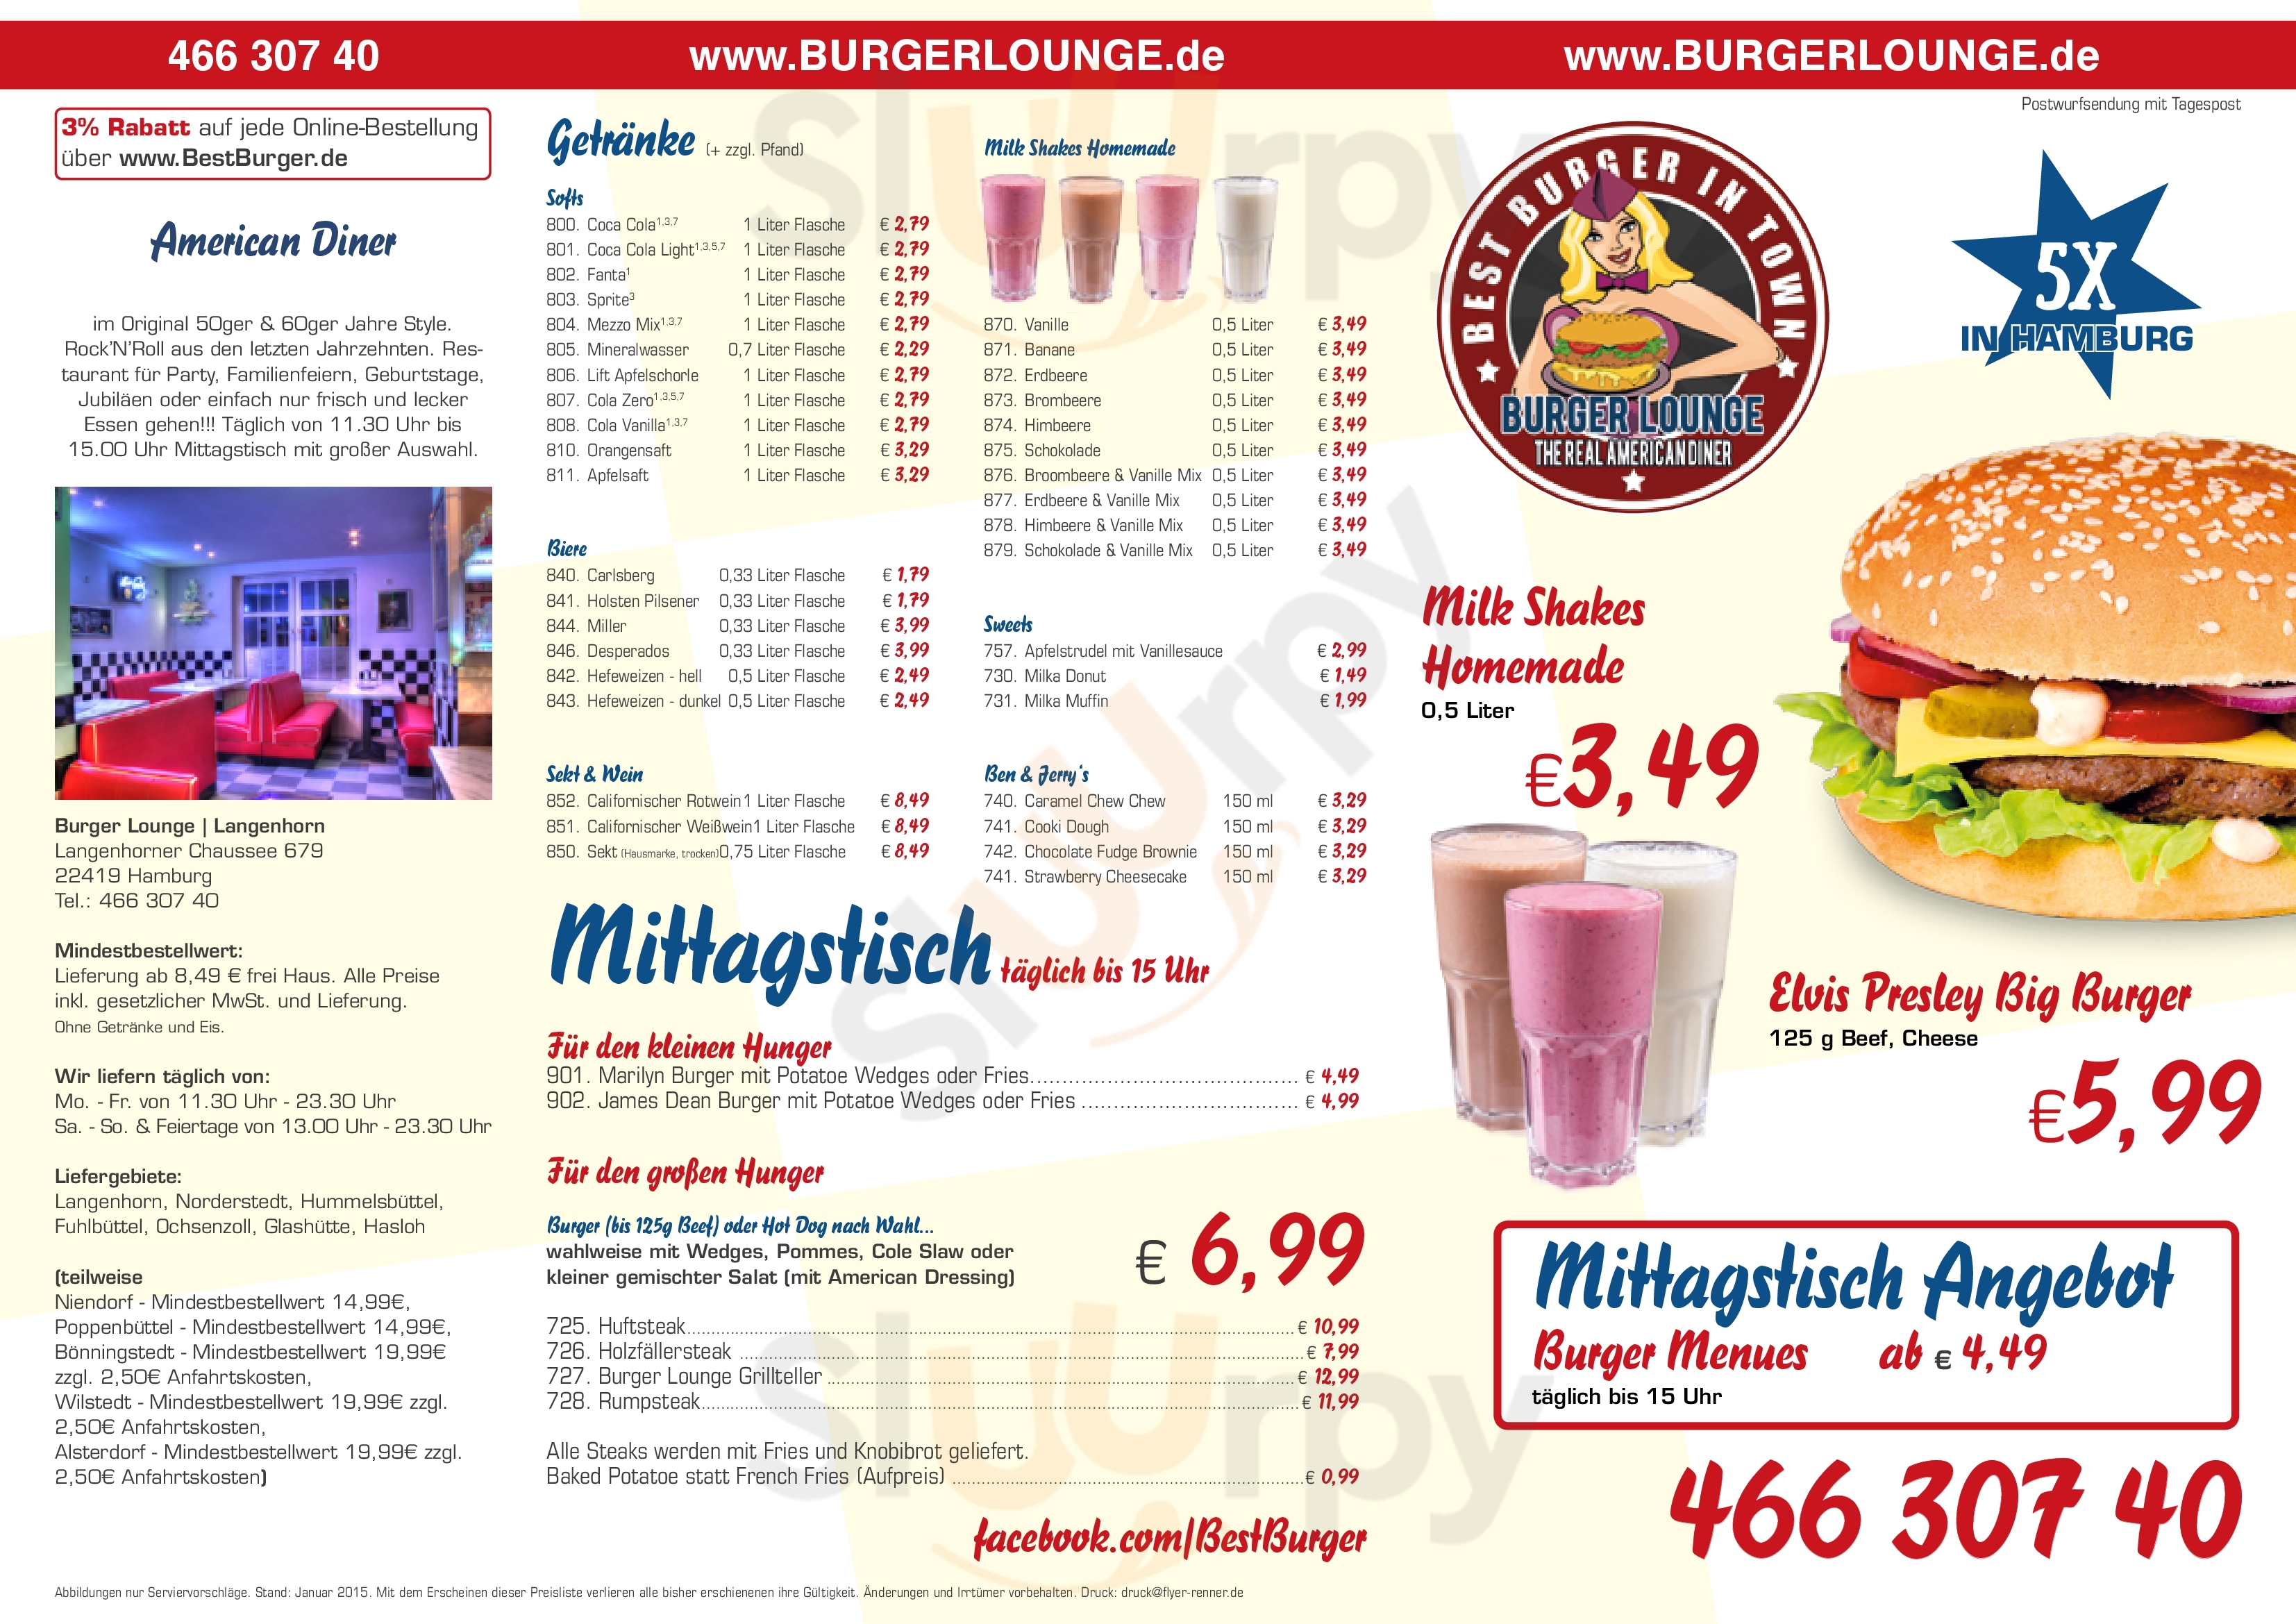 Burger Lounge Hamburg Menu - 1